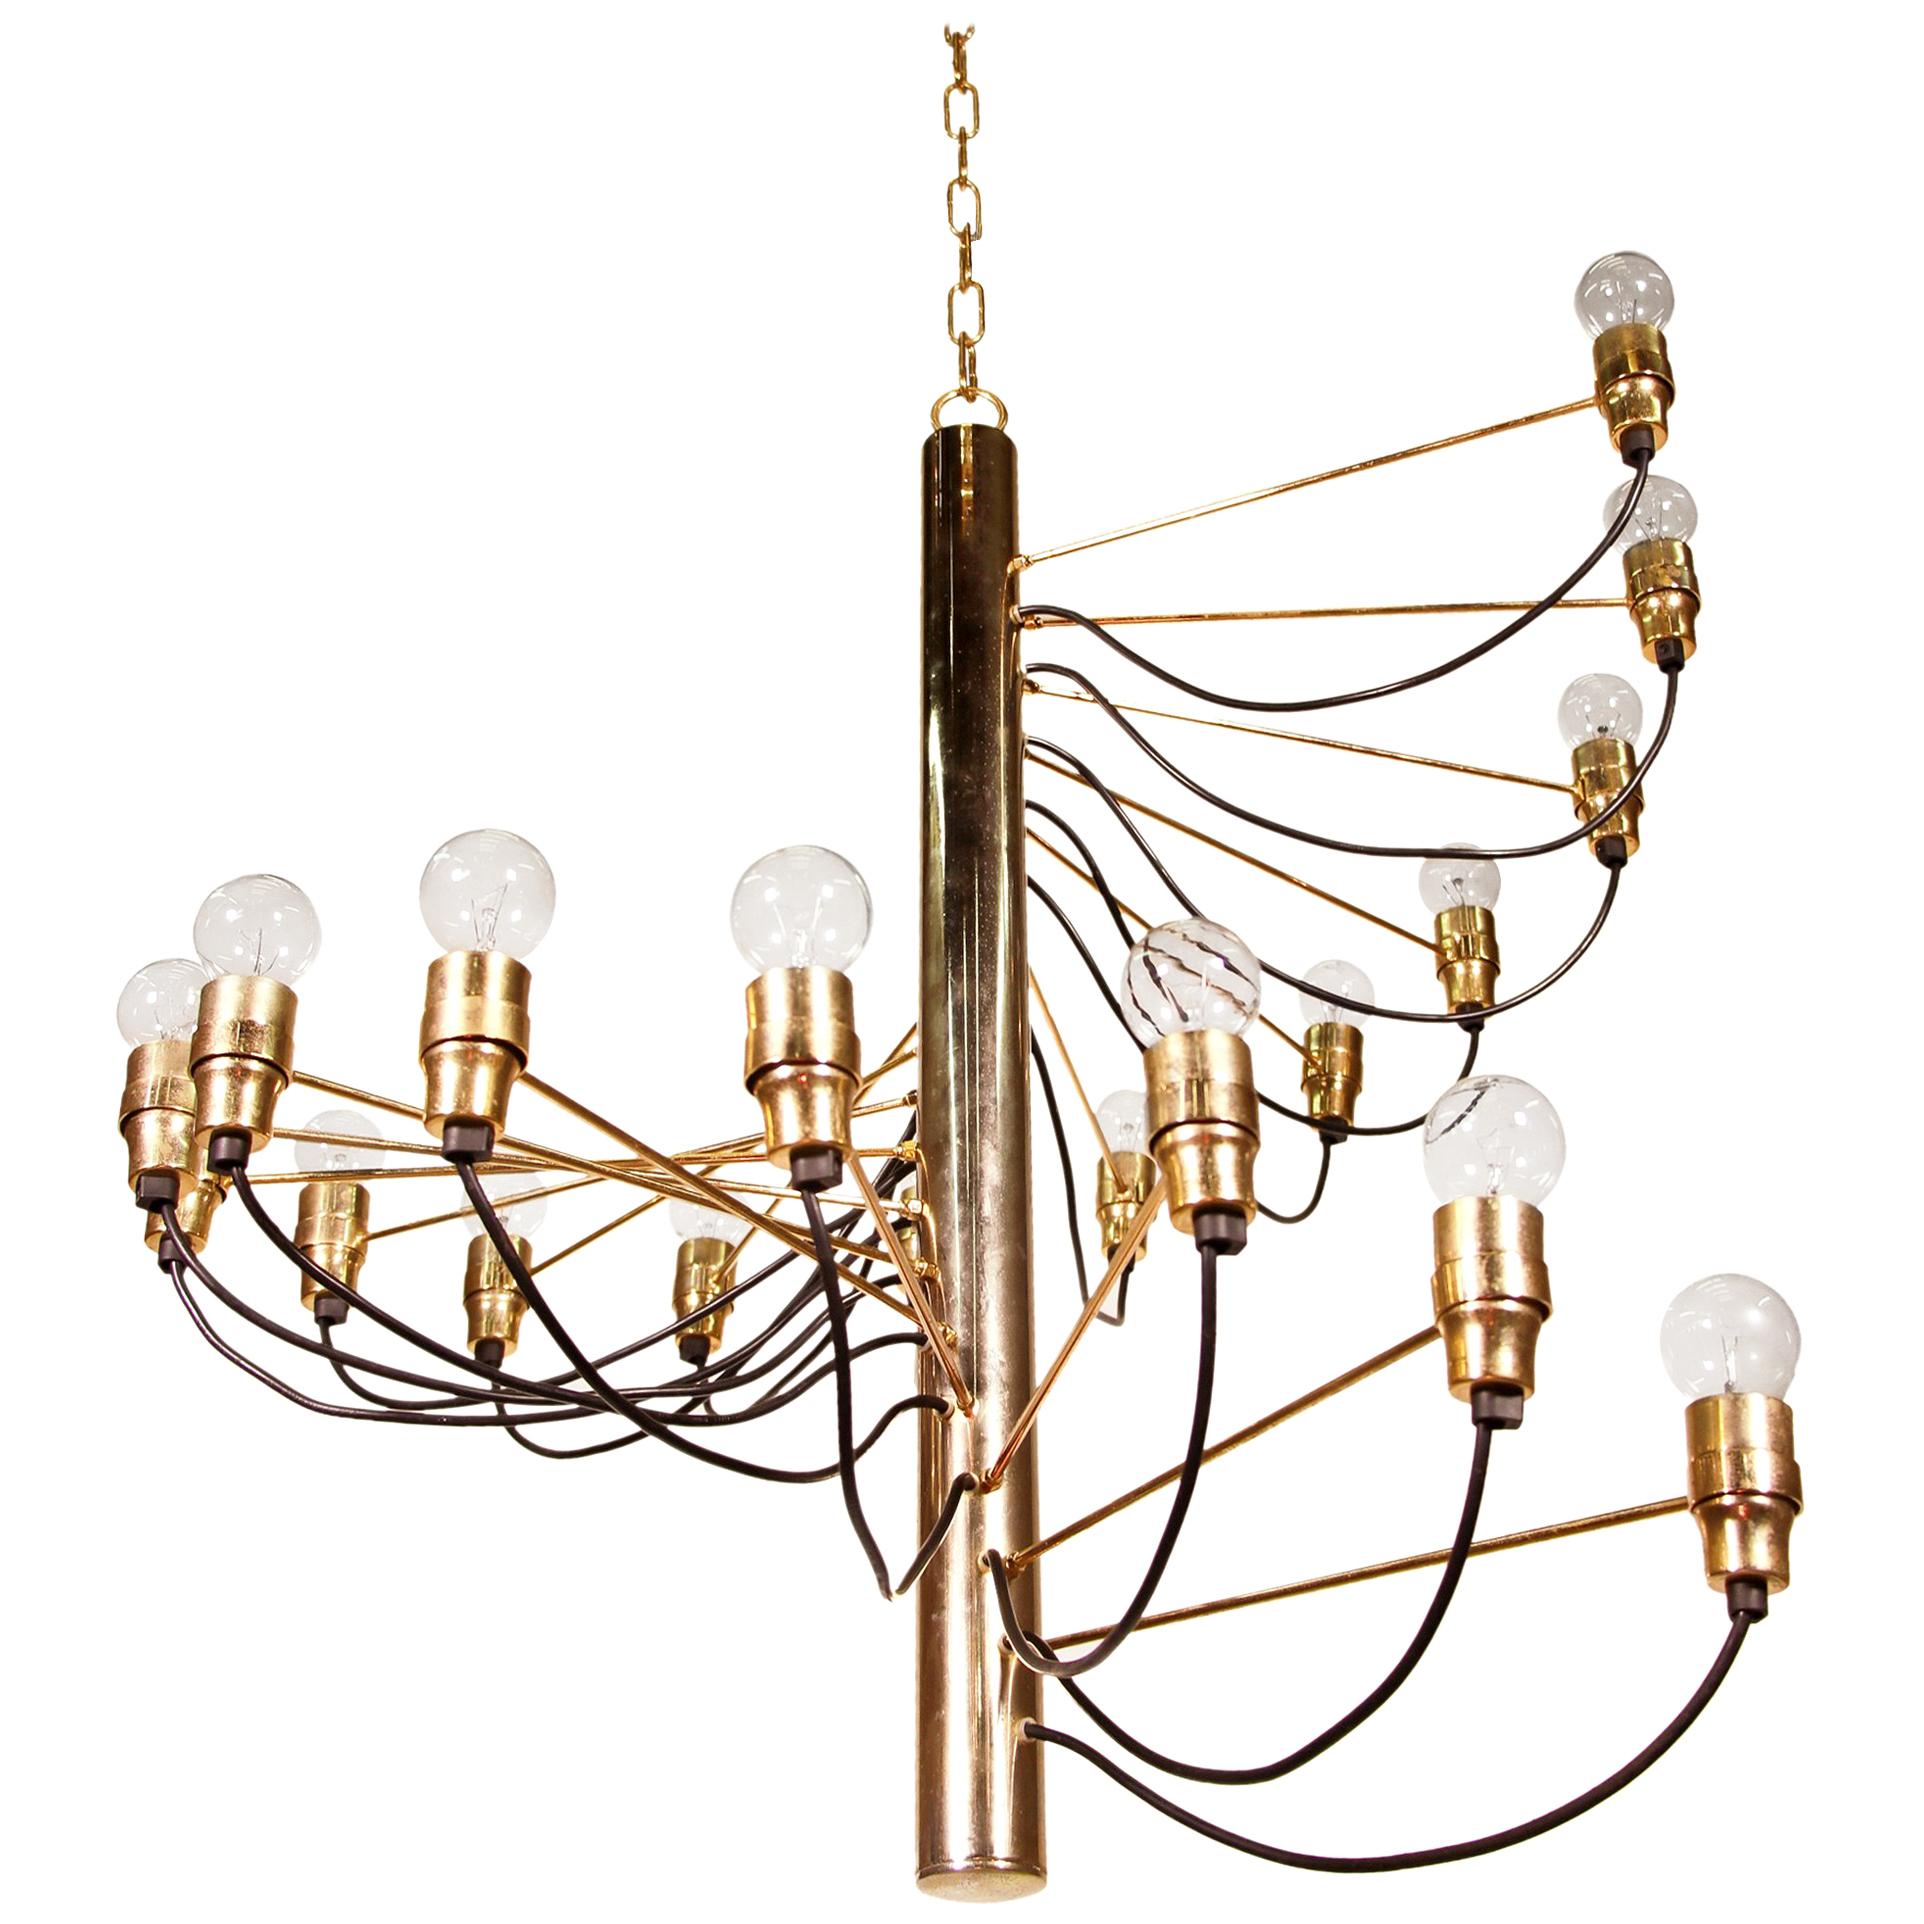 Spiral Brass Chandelier Designed in Italy by Gino Sarfatti, 1950s